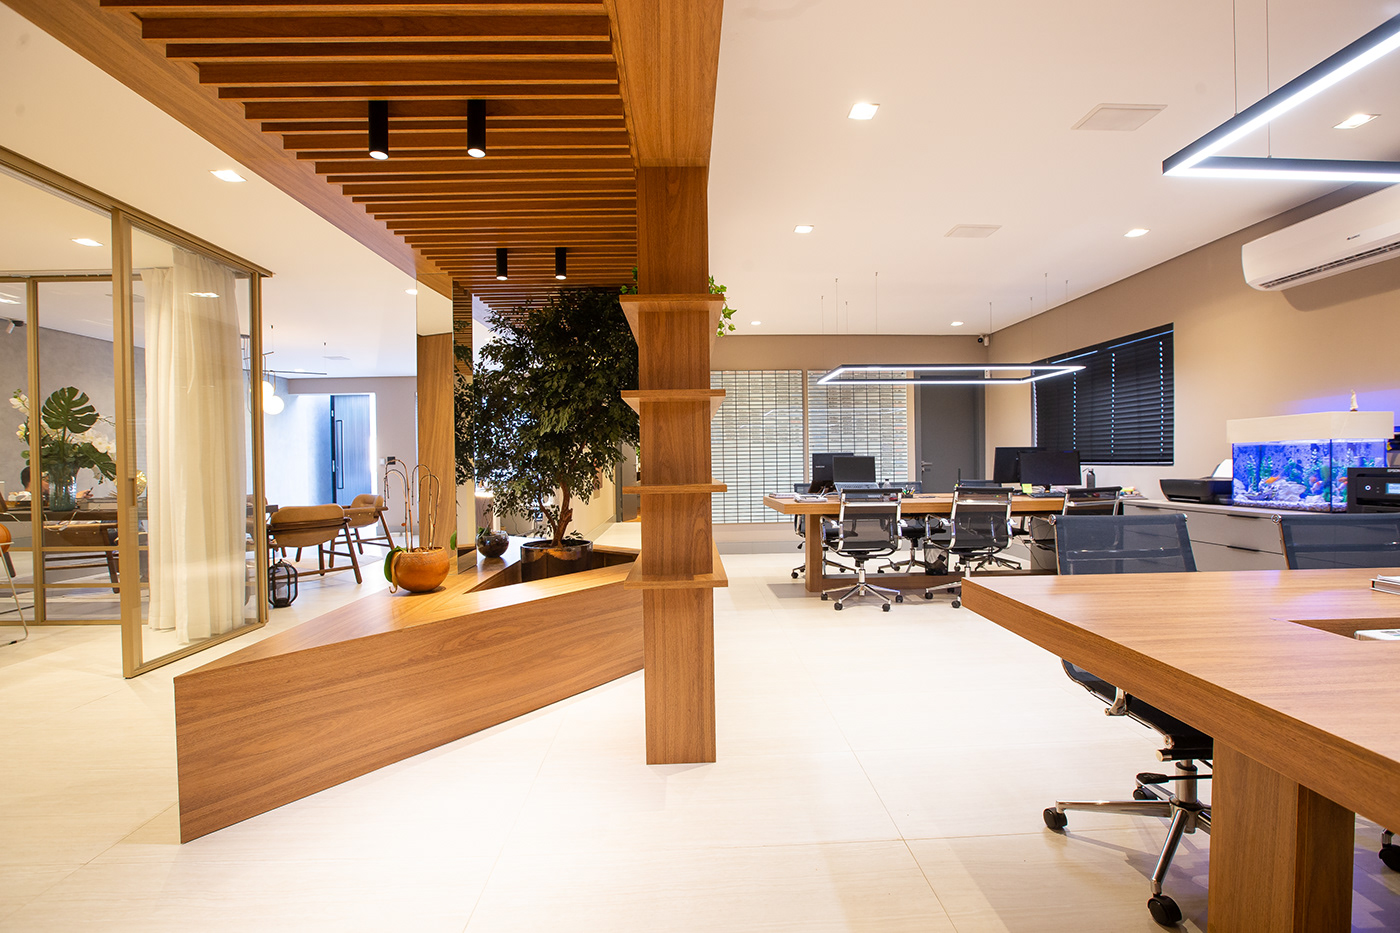 ARQUITETURA interiores Decoração architecture interior design  escritorio Office modern